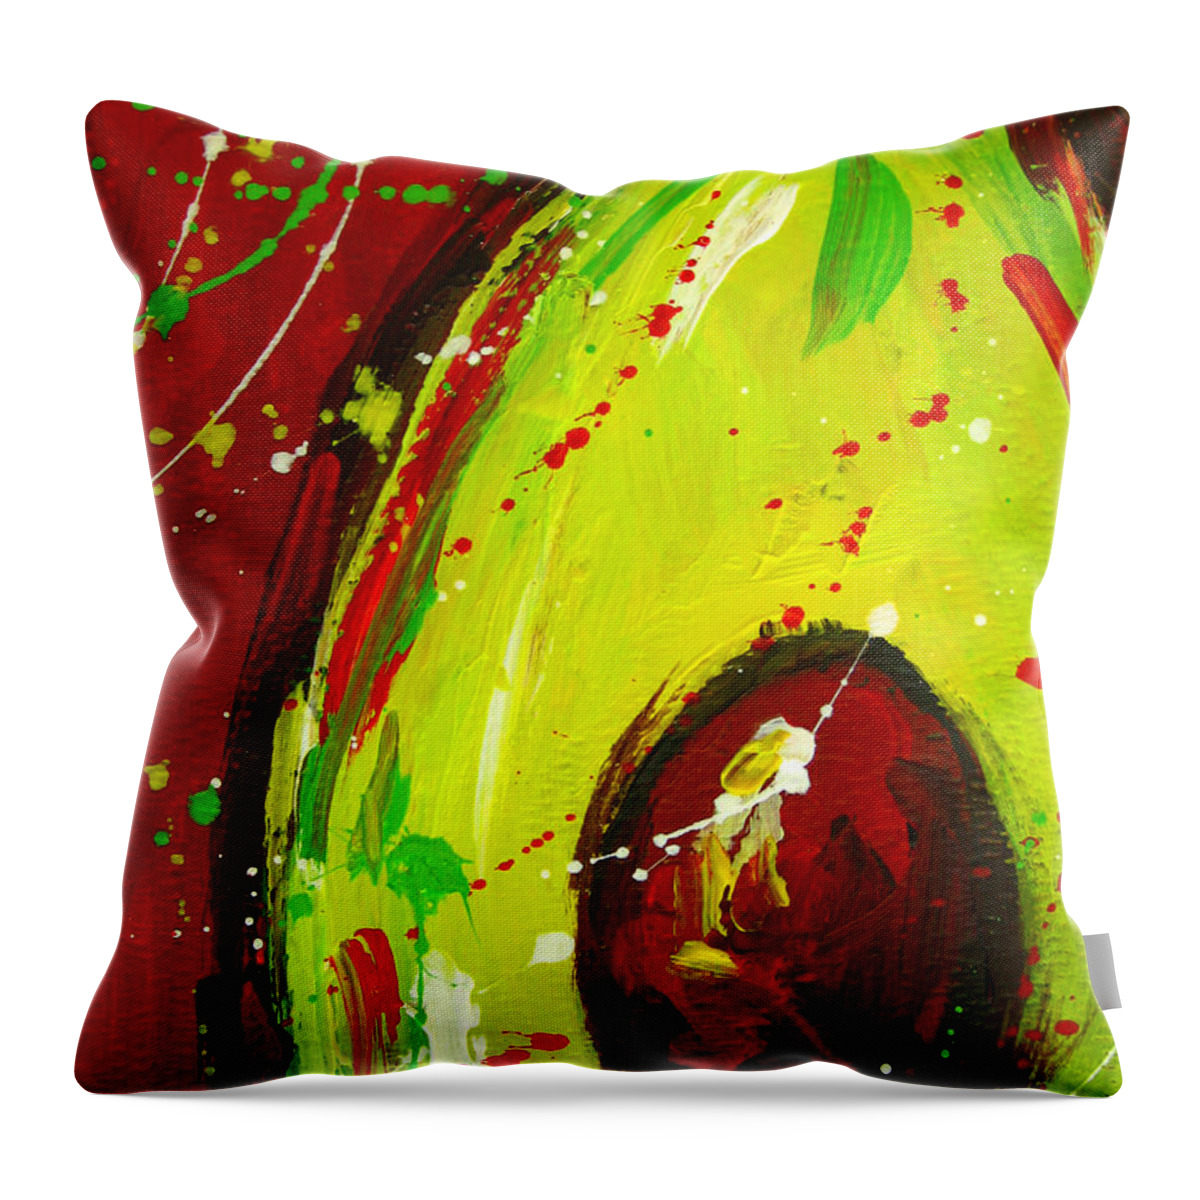 Modern Avocado Art Throw Pillow featuring the painting Crazy Avocado 3 - Modern Art by Patricia Awapara